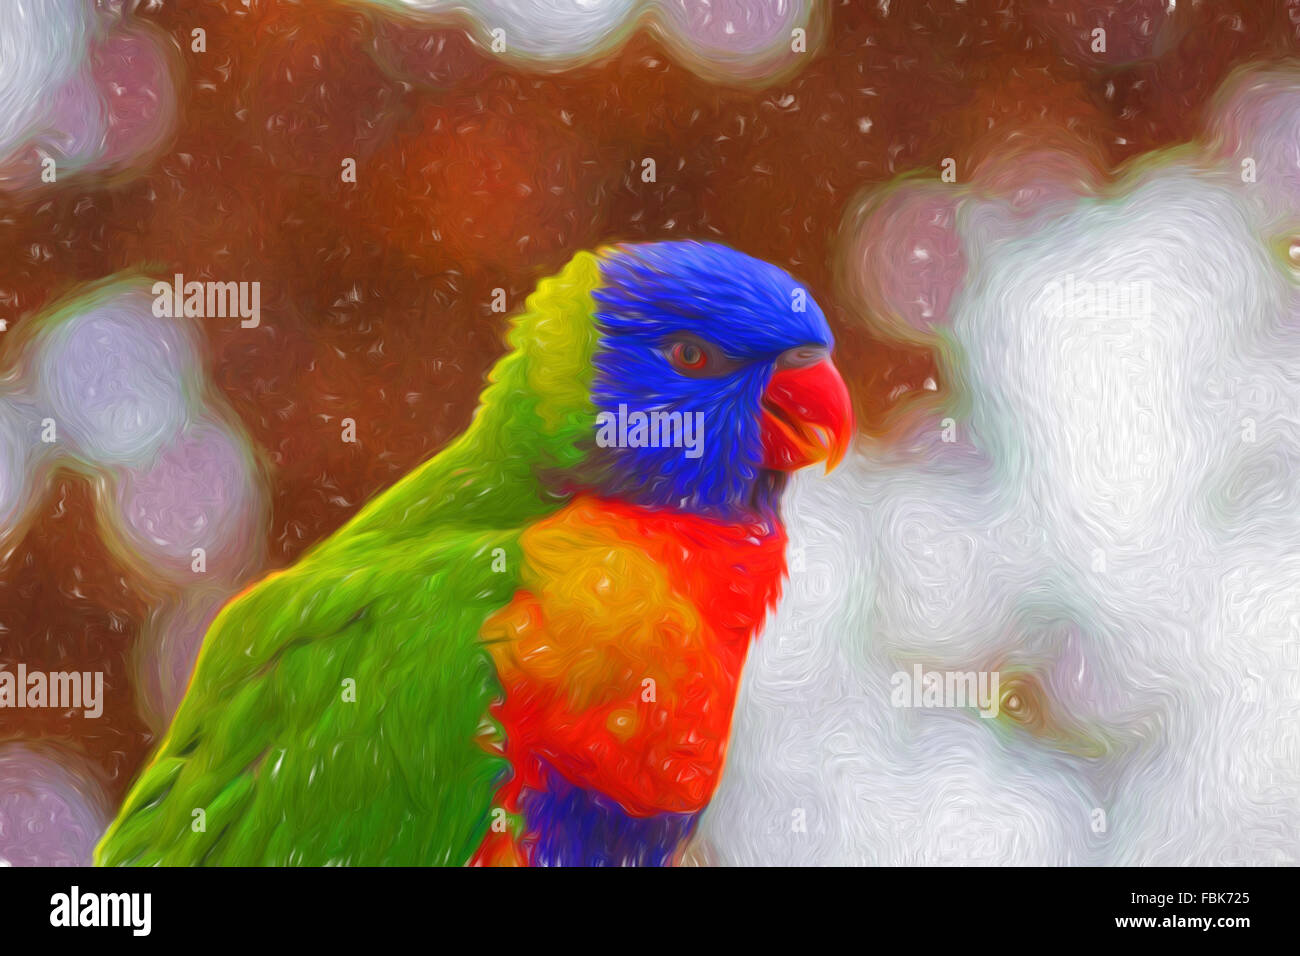 Colorful parrot, Lori, digital painting illustration in vivid colors Stock Photo